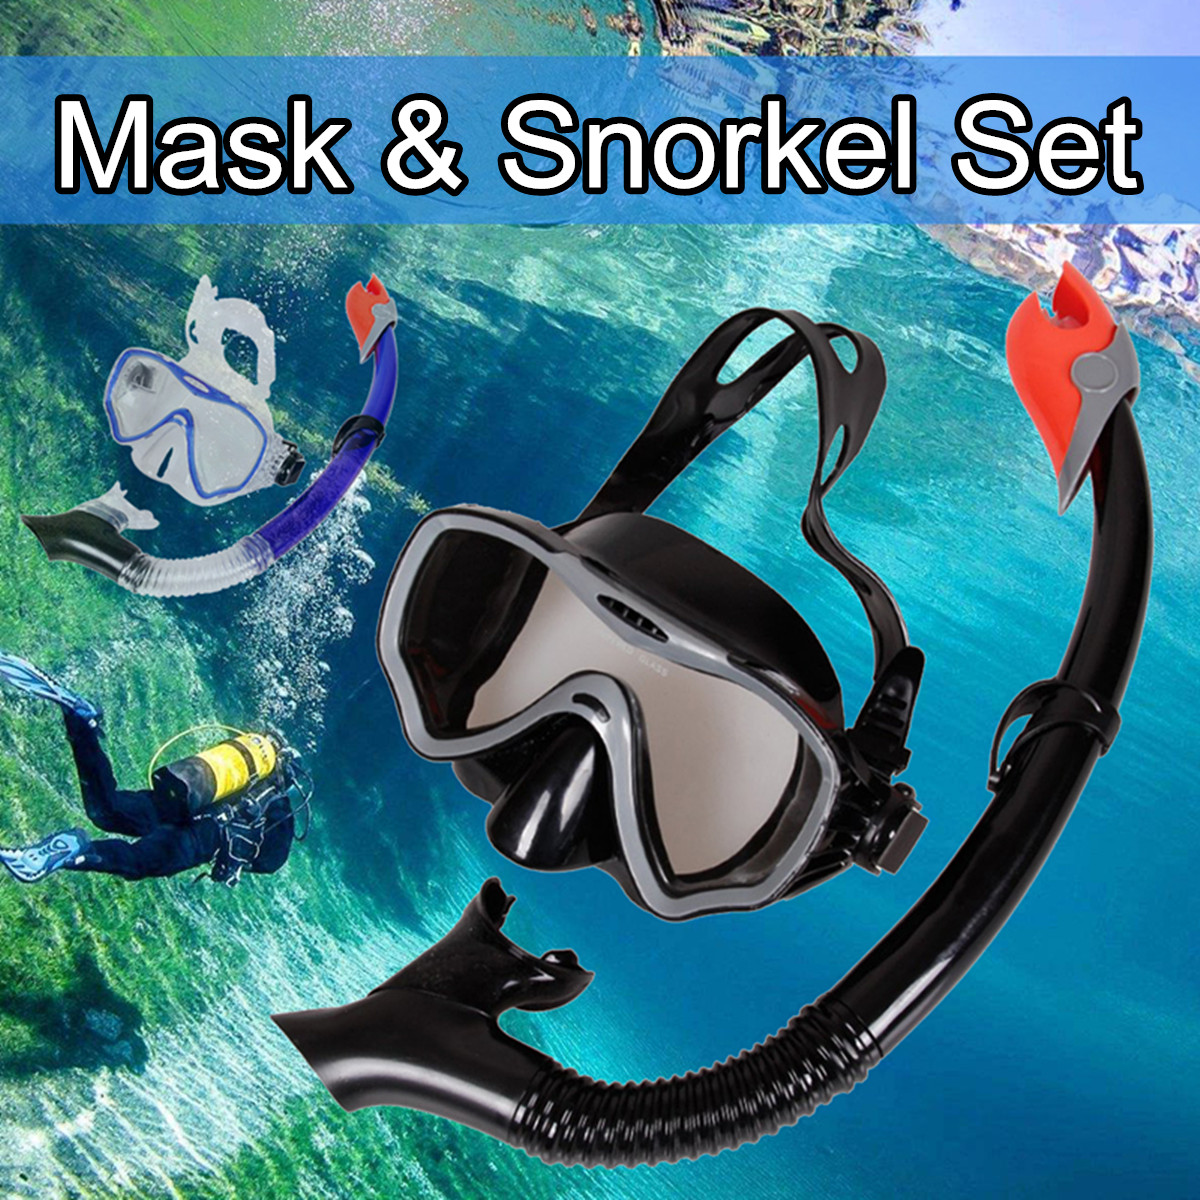 Snorkel-Set-Dry-Top-Snorkel-Mask-Professional-Diving-Snorkelling-Mask-and-SnorkelL-Diving-Set-1525316-1